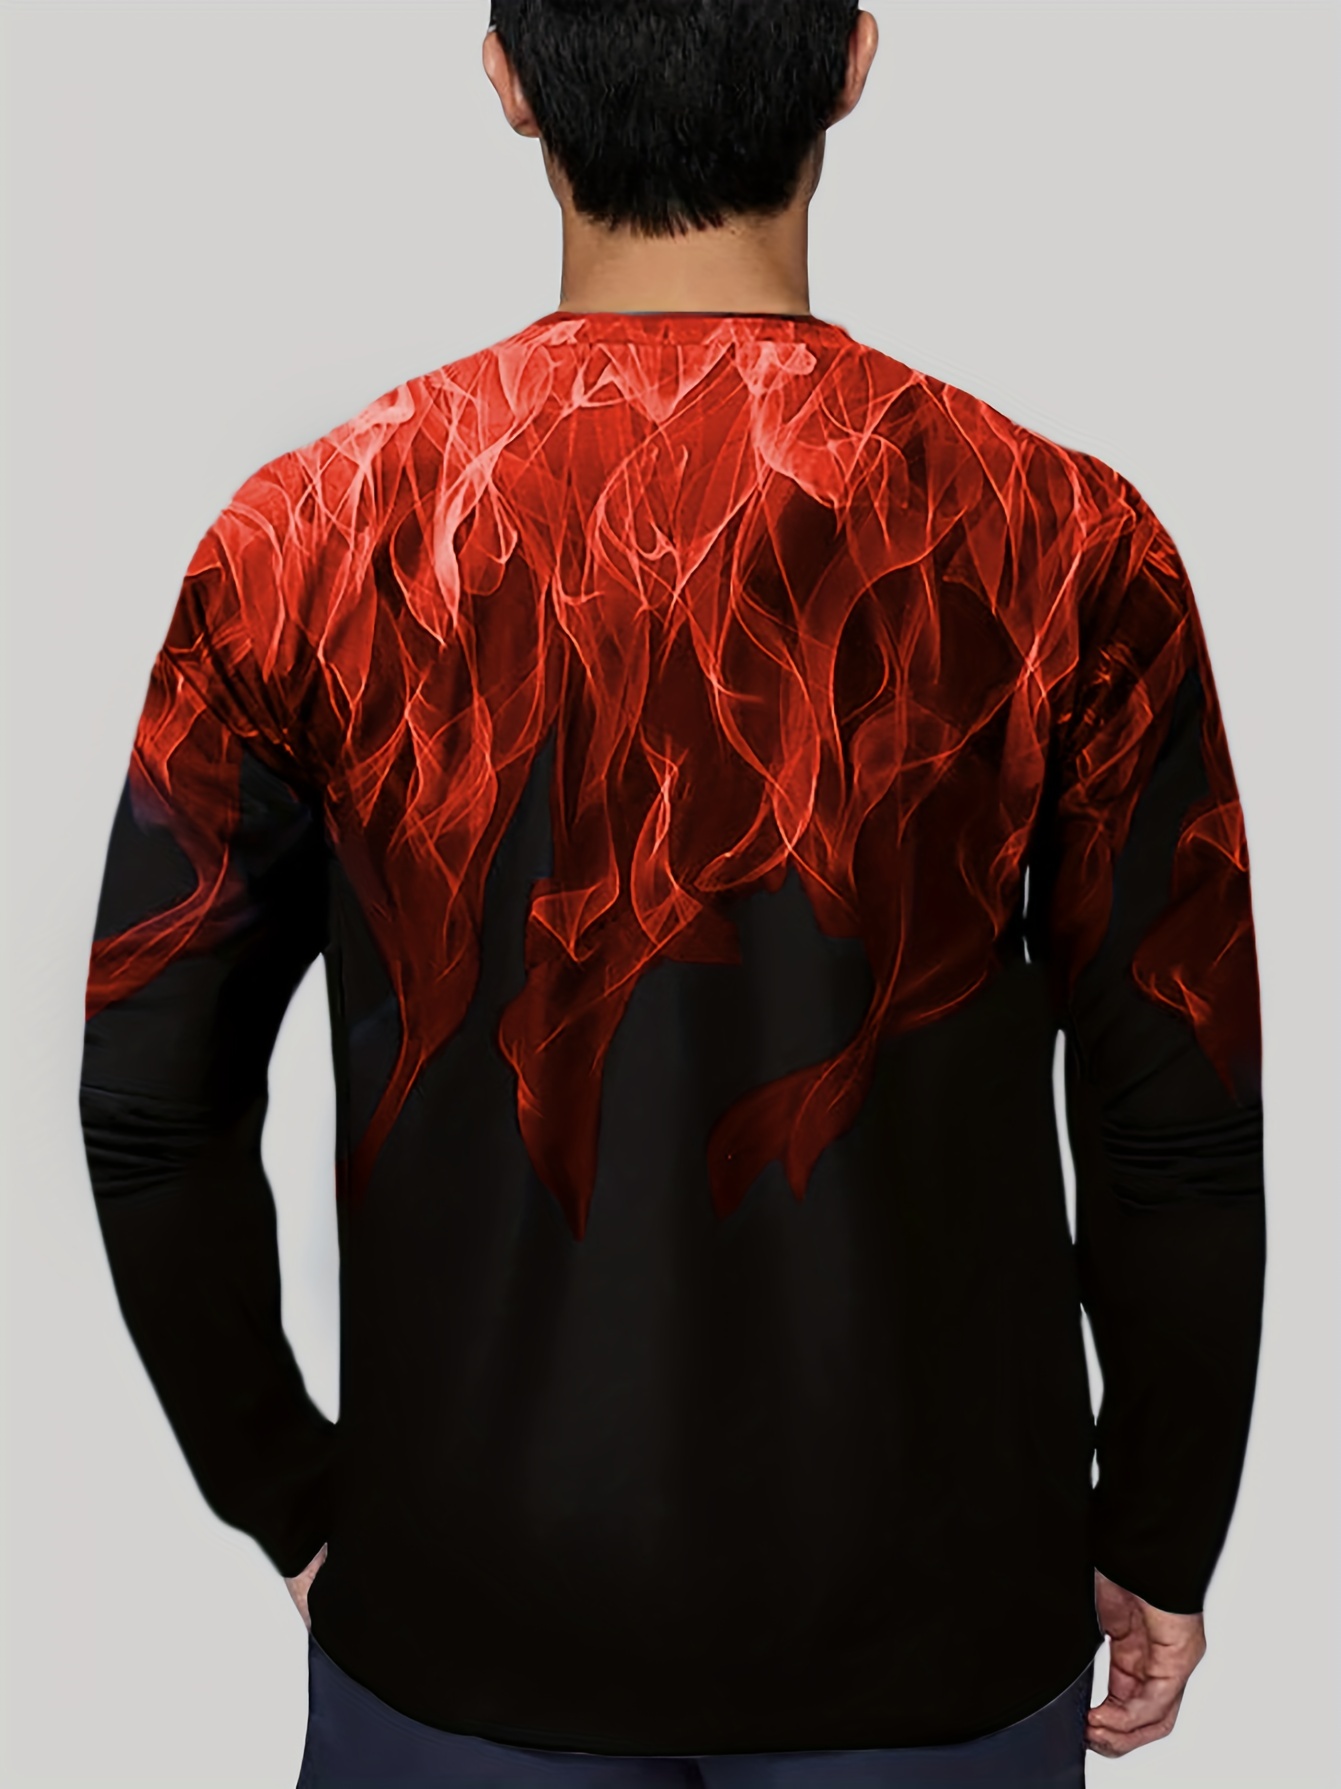 Mens Long Sleeve Shirts, 3D Fire Graphic Printed Crewneck Tee Tops